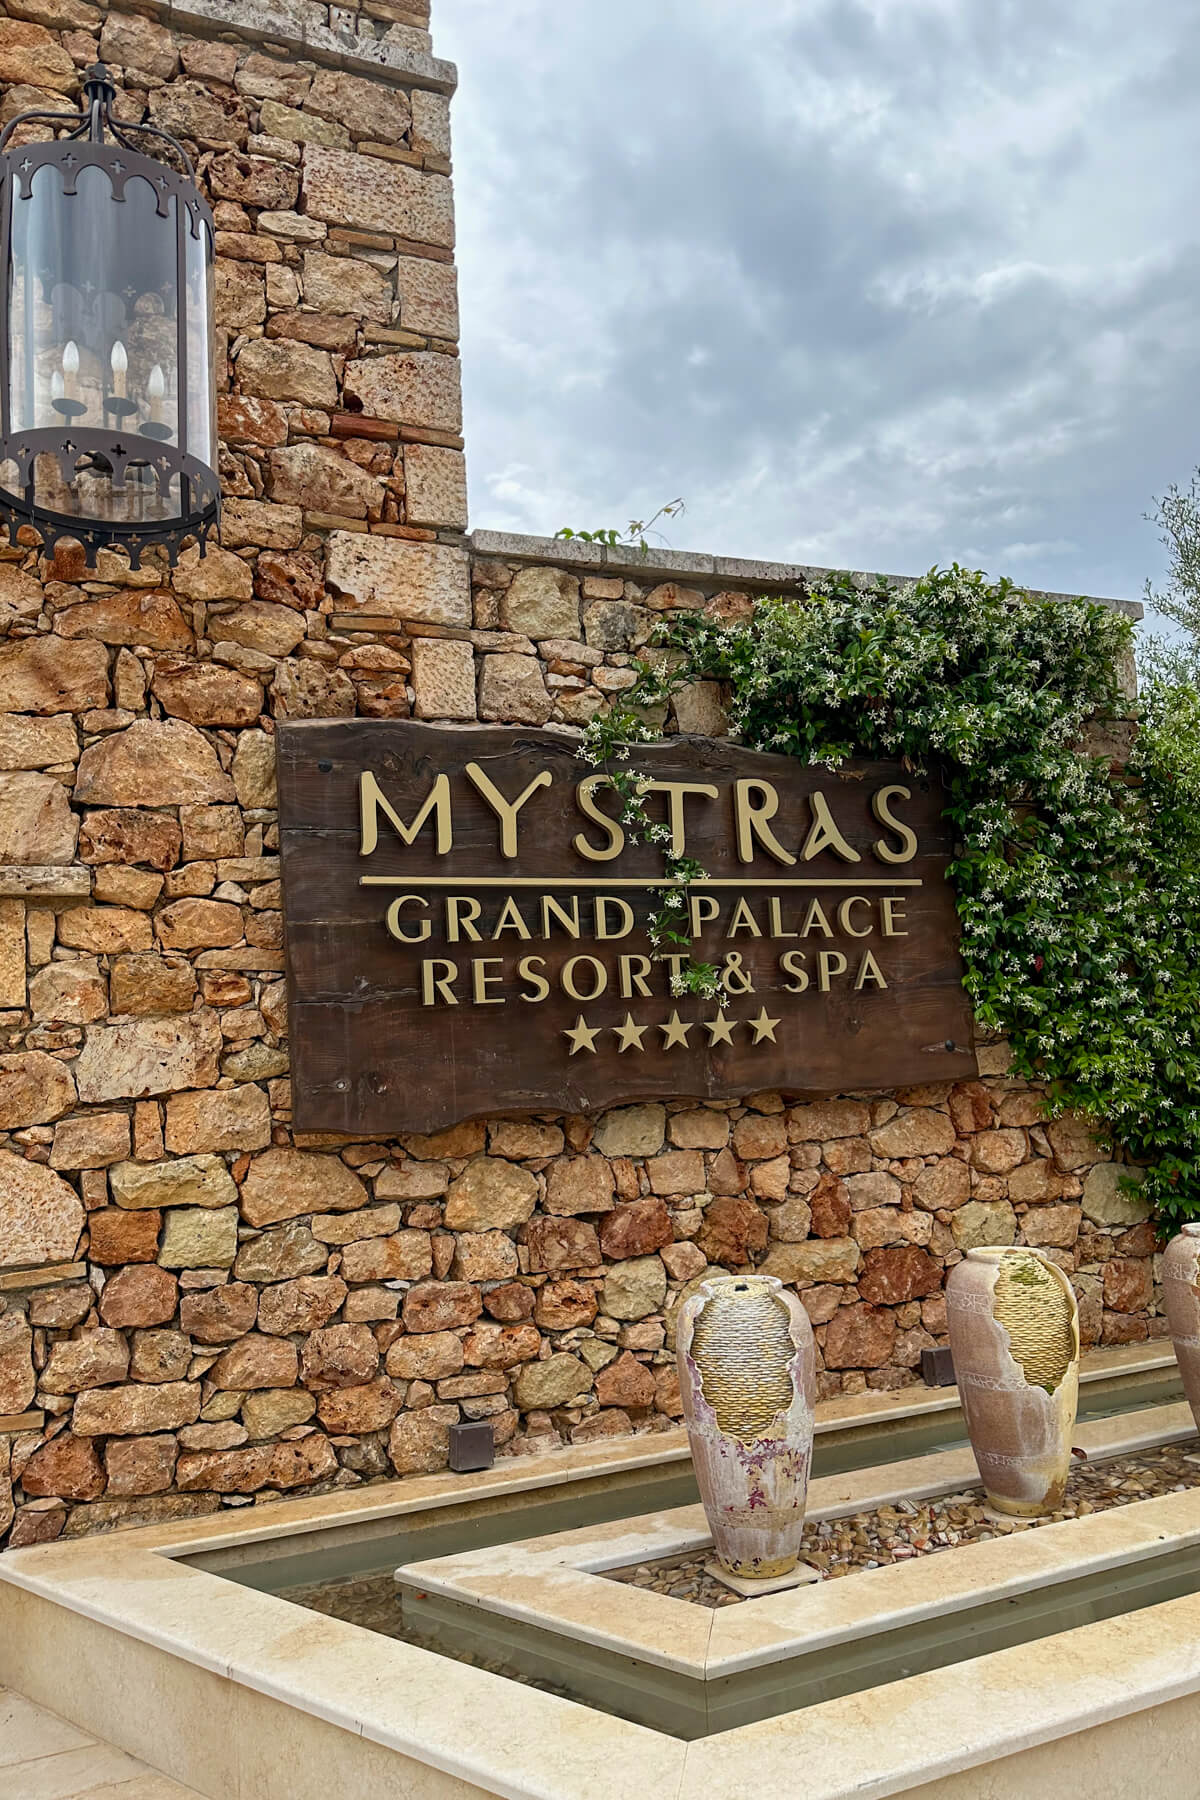 Mystras Resort and Spa sign